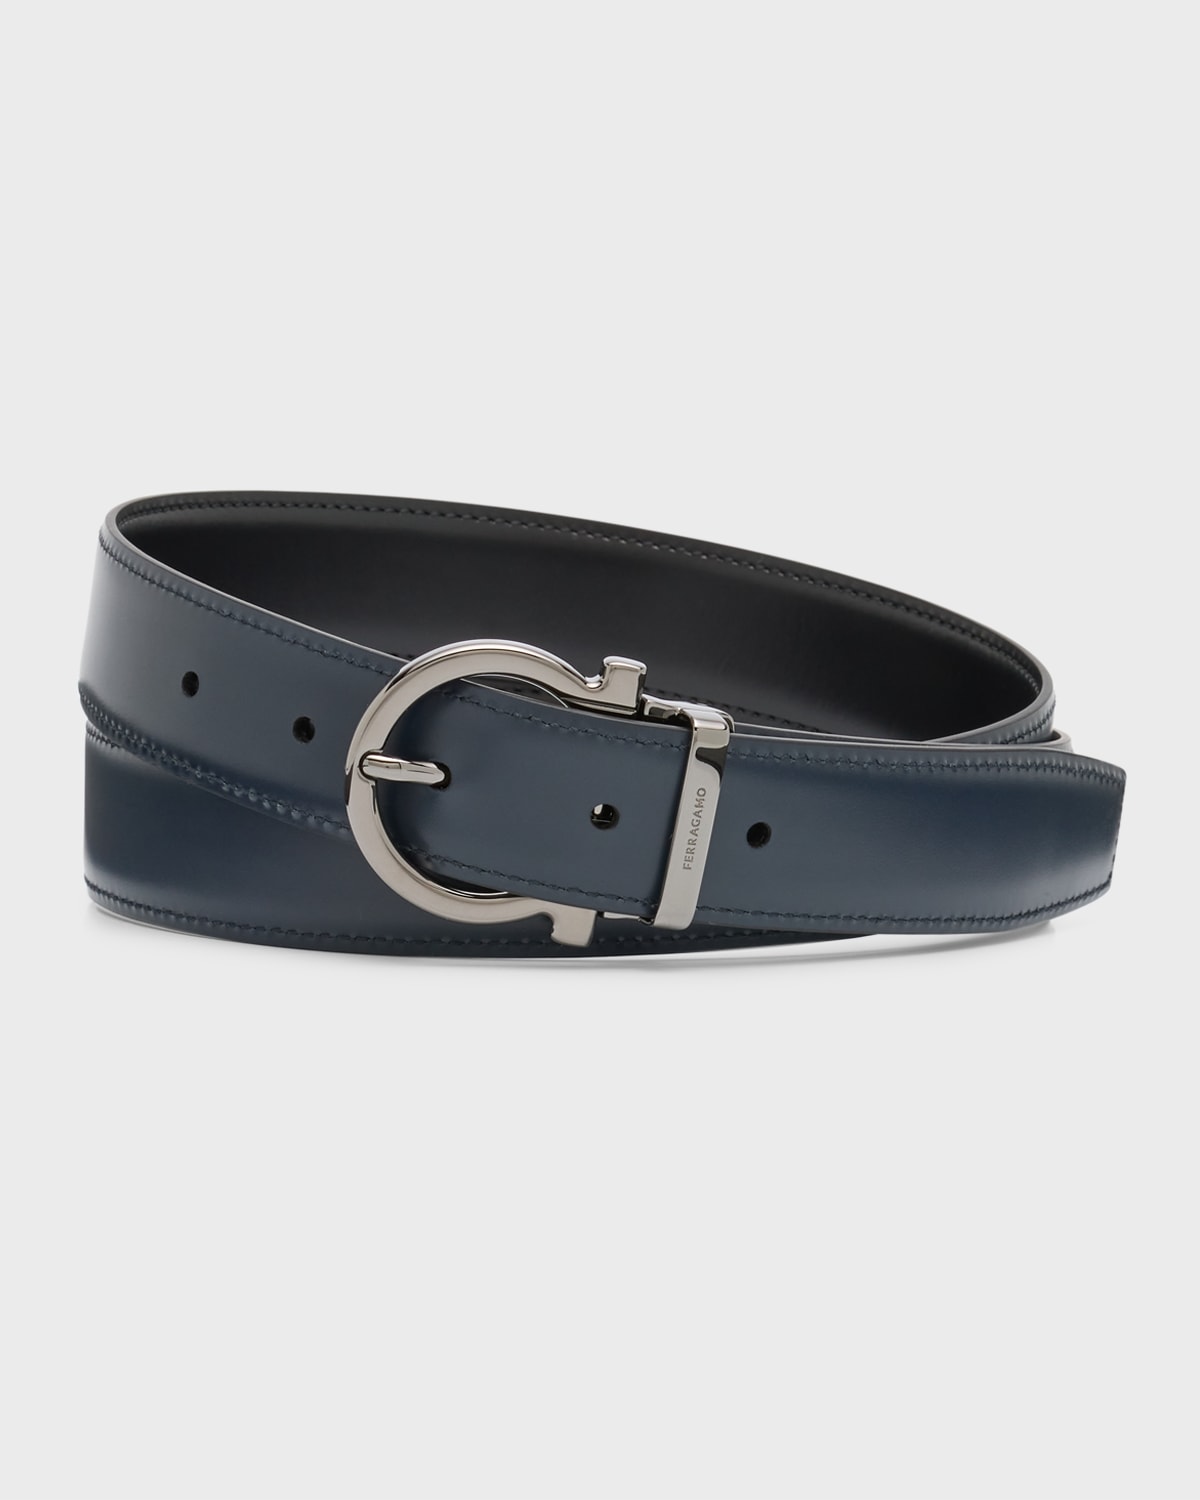 Ferragamo Men's Reversible Leather Belt | Neiman Marcus